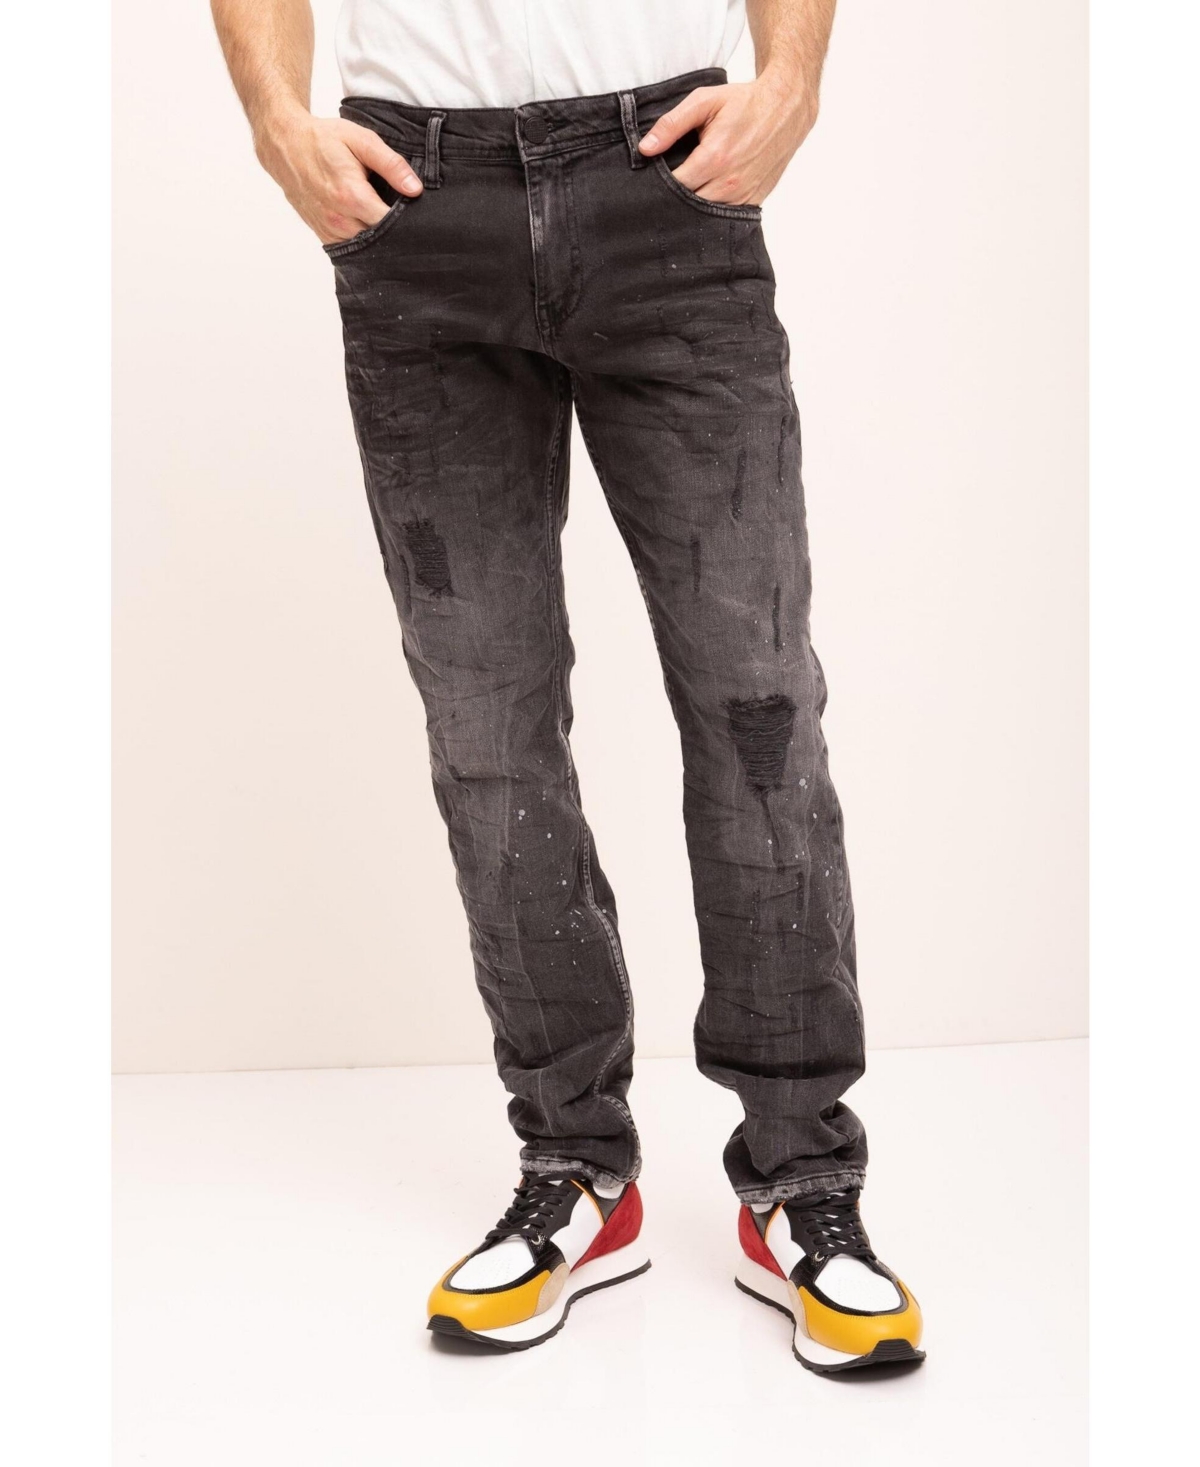 Men's Modern Distressed Denim Jeans - Black